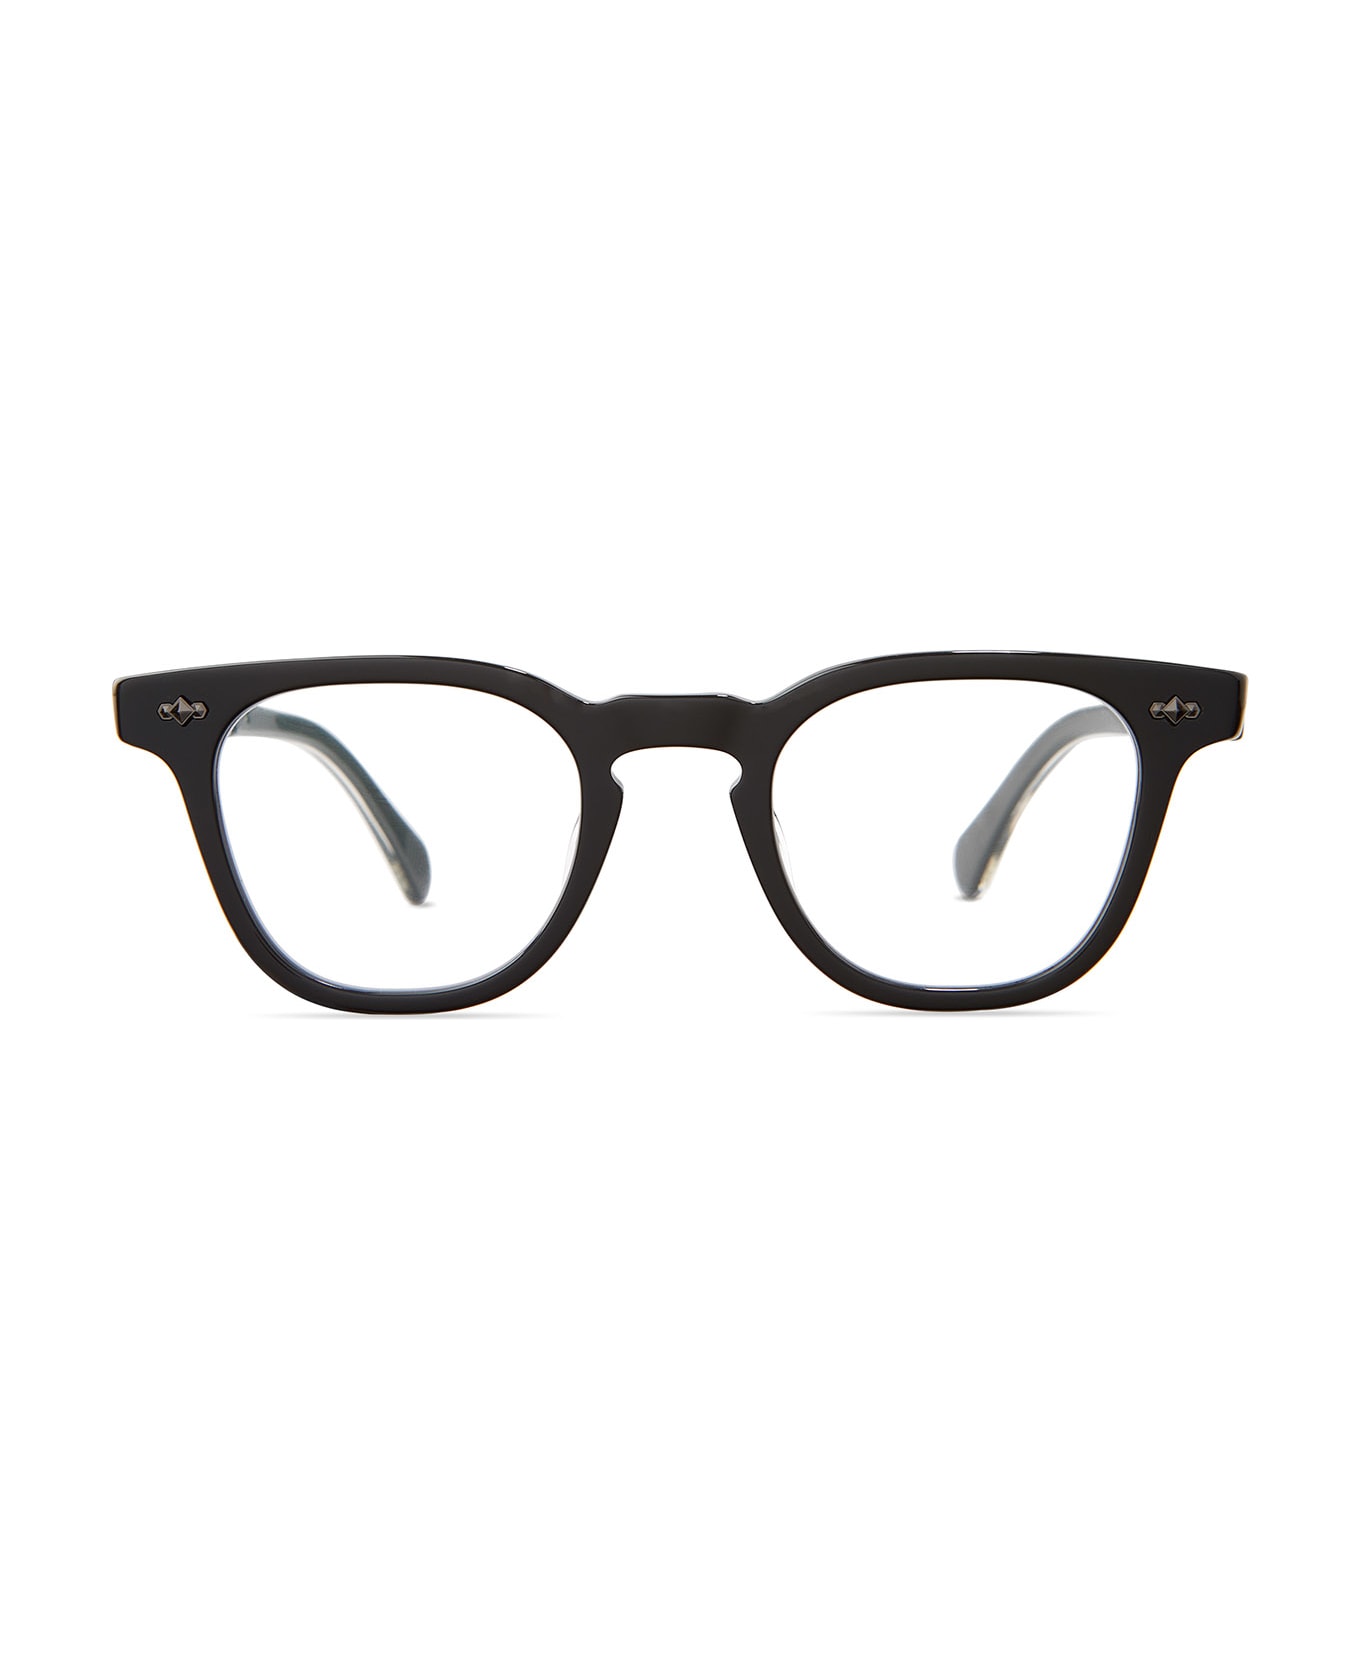 Mr. Leight Dean C 44 Black-pewter Glasses - 44 Black-Pewter